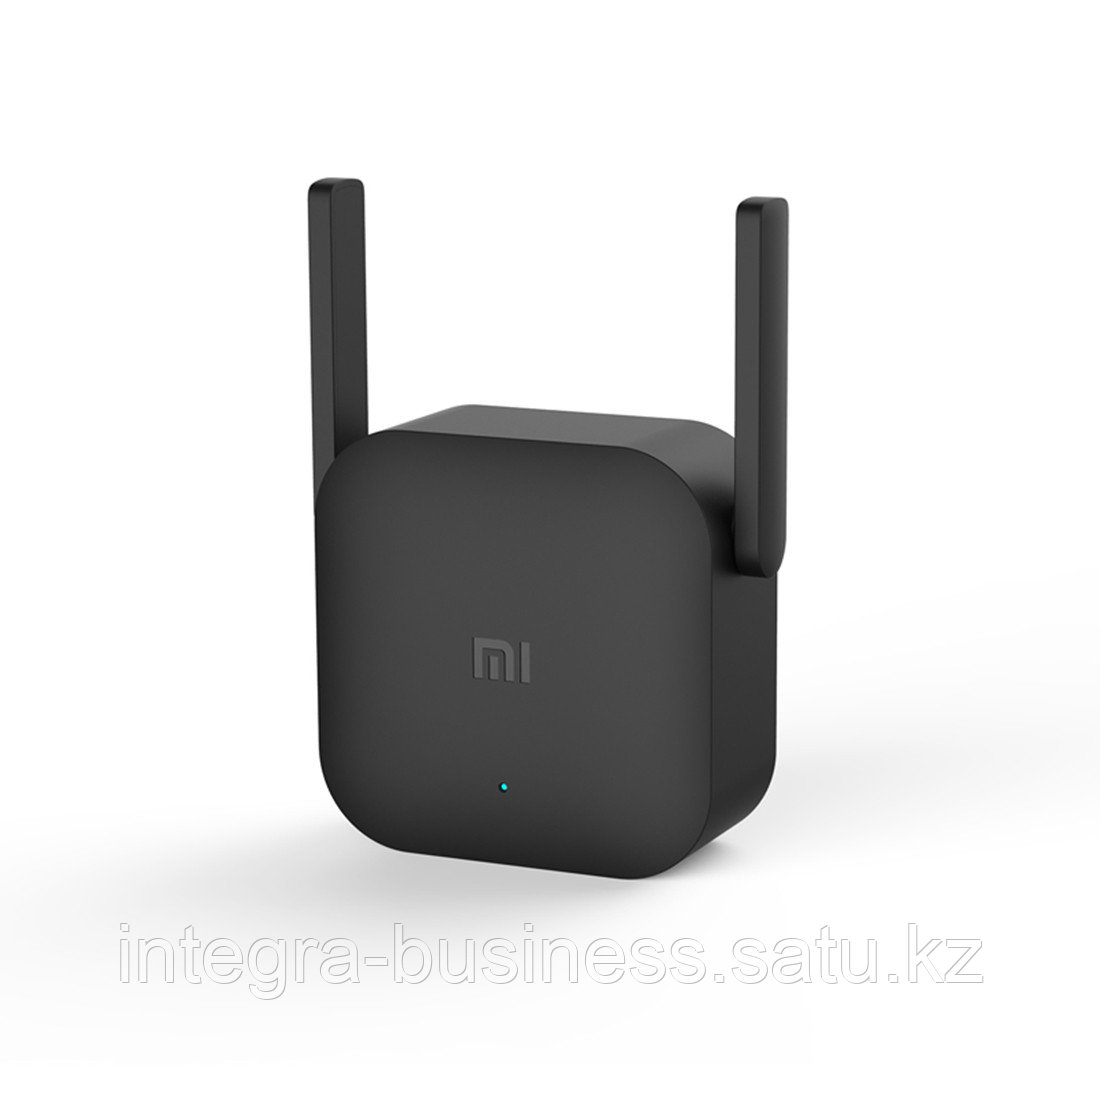 Усилитель Wi-Fi сигнала Xiaomi Mi Wi-Fi Range Extender Pro, фото 1